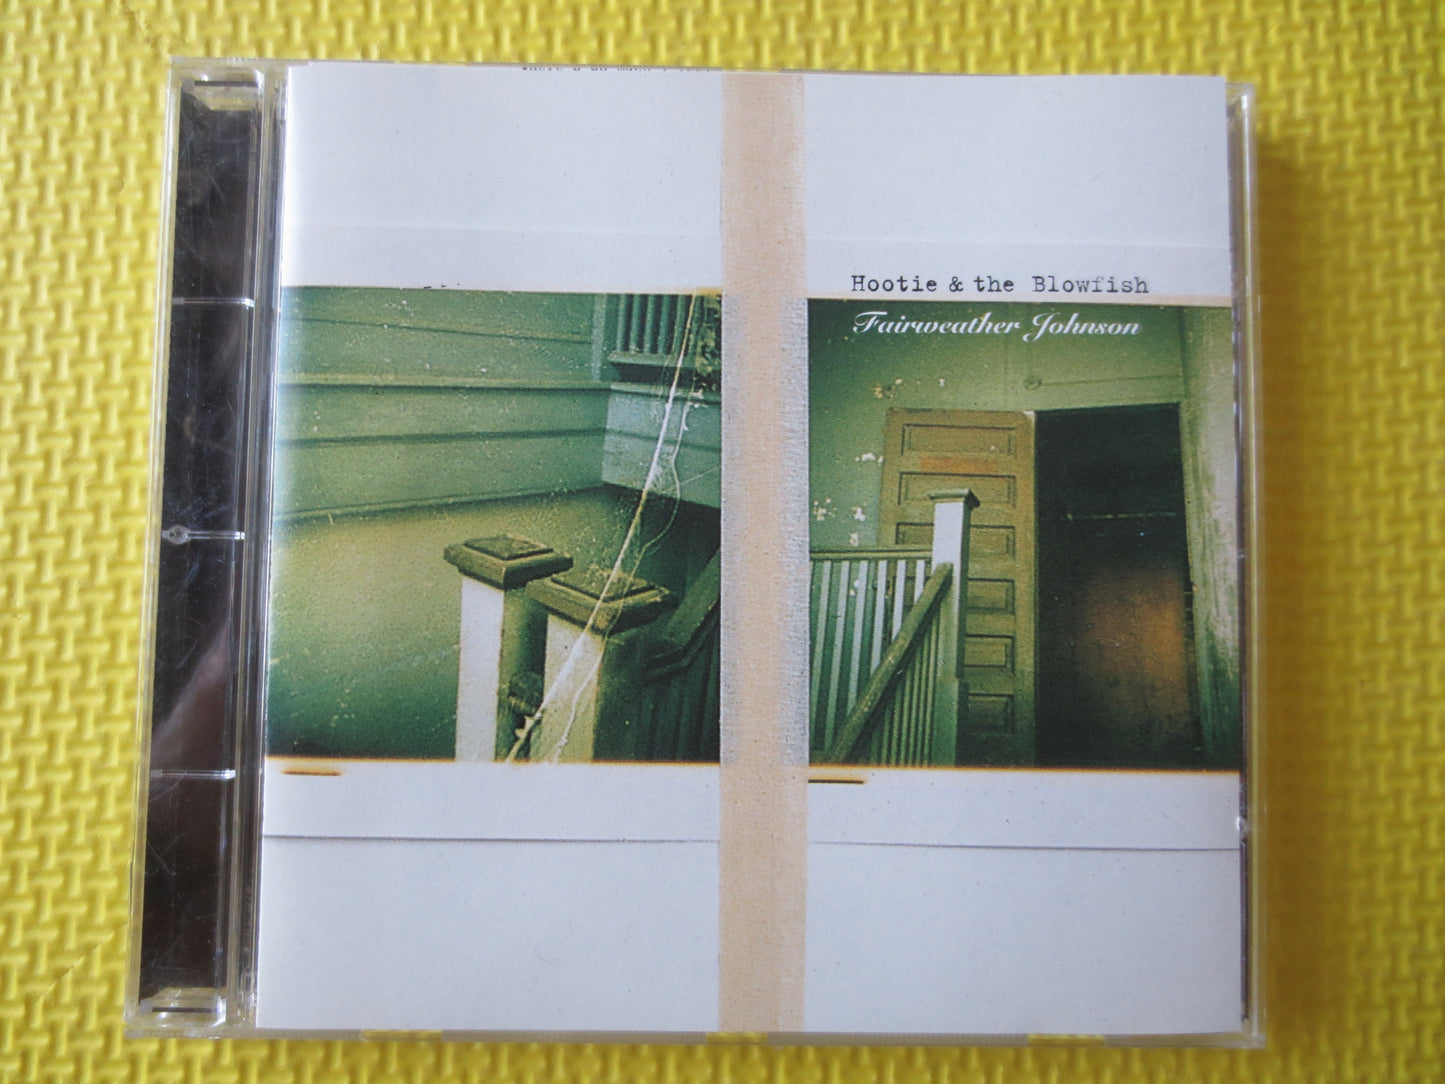 HOOTIE and the BLOWFISH, FAIRWEATHER Johnson, Alternative Rock Cds, Classic Rock Cds, Pop Rock Cds, Music Cd, 1996 Compact Discs